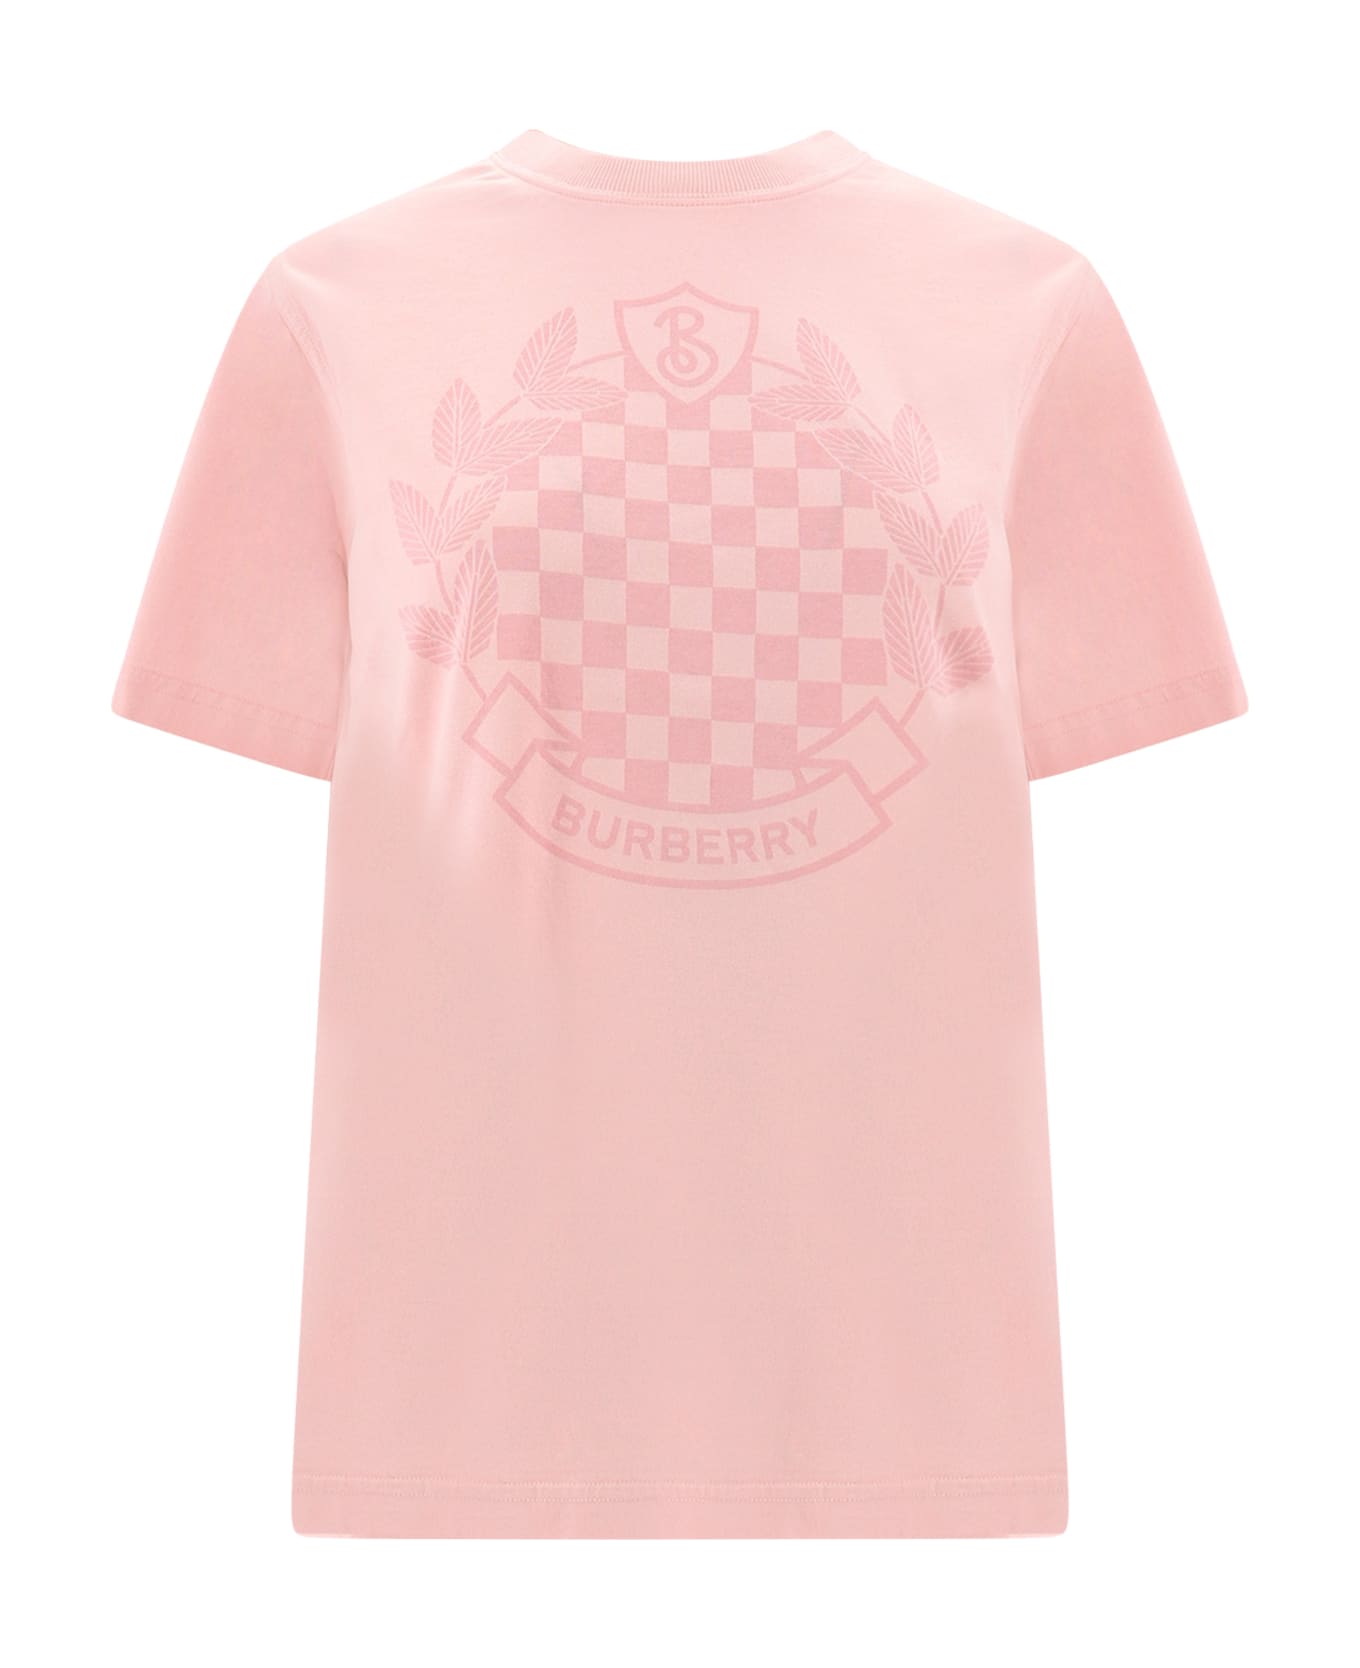 Burberry T-shirt - Pink